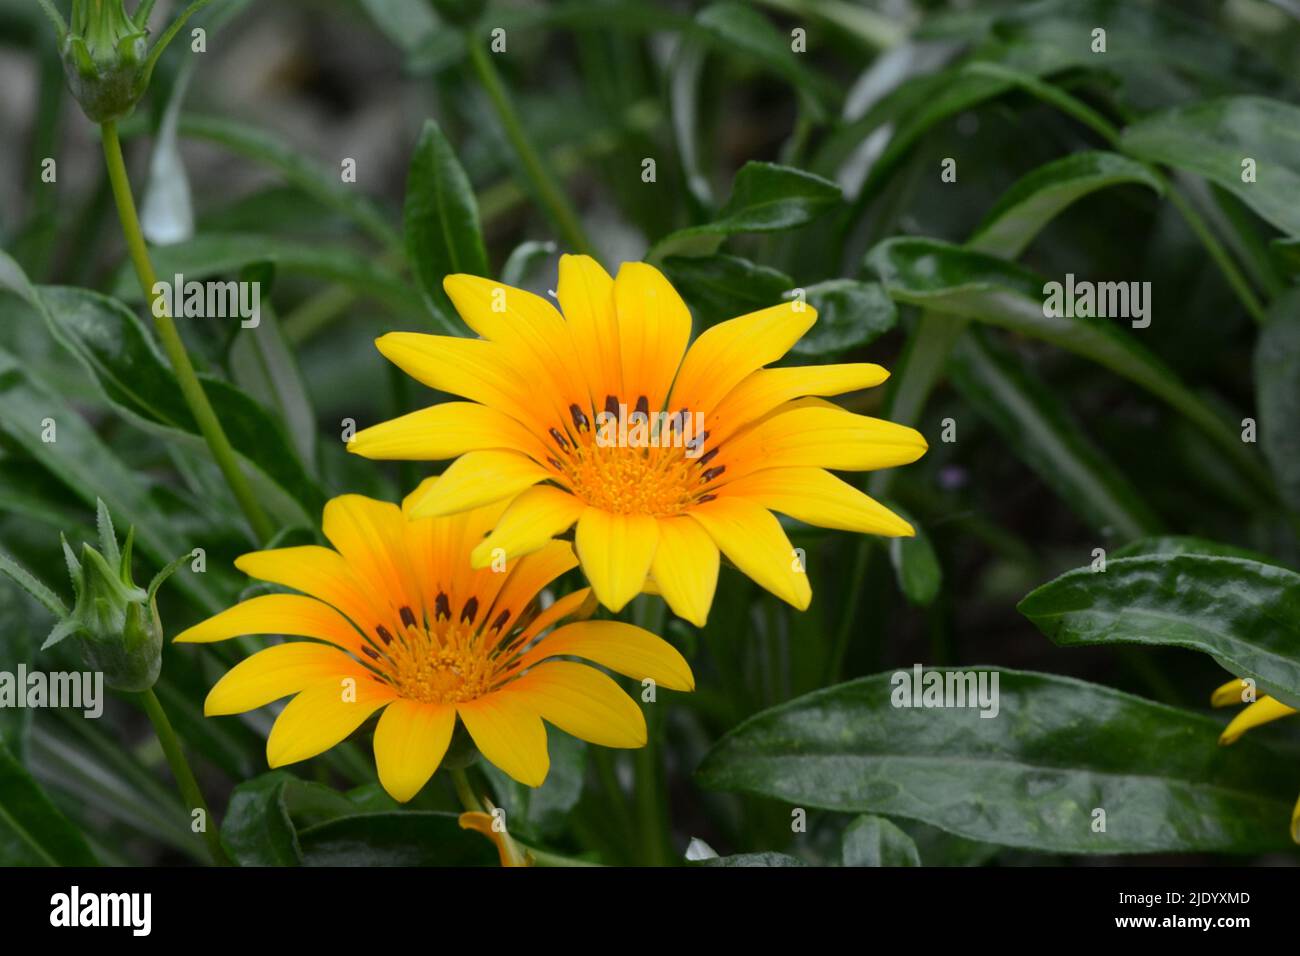 Gazania Daybreak Bright daybreak type flower Orange Treasure flower orange-yellow daisy